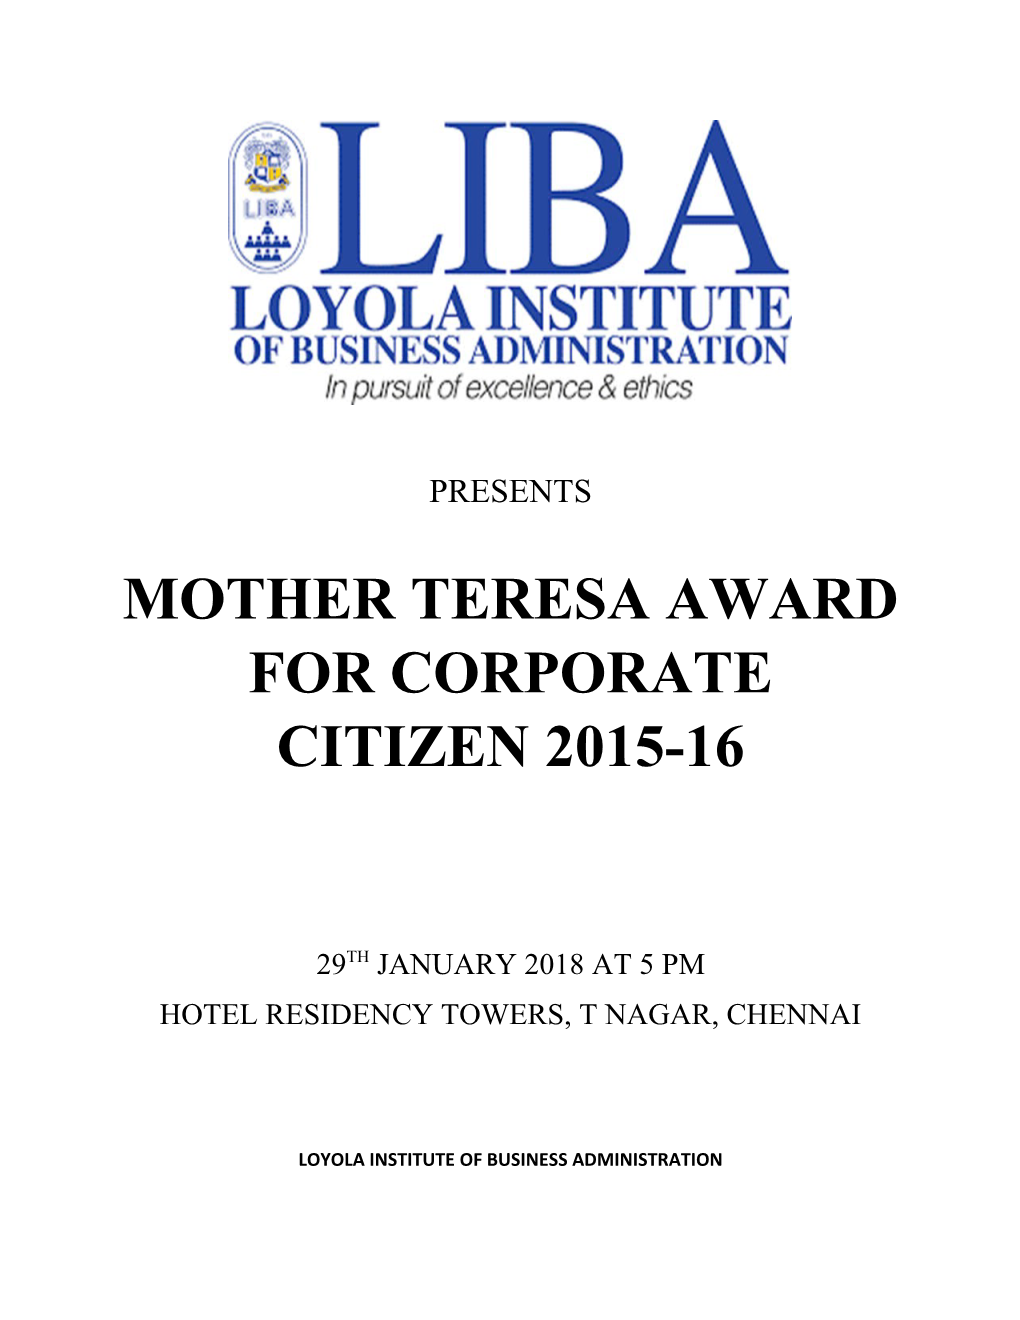 Mother Teresa Award for Corporate Citizen 2015-16